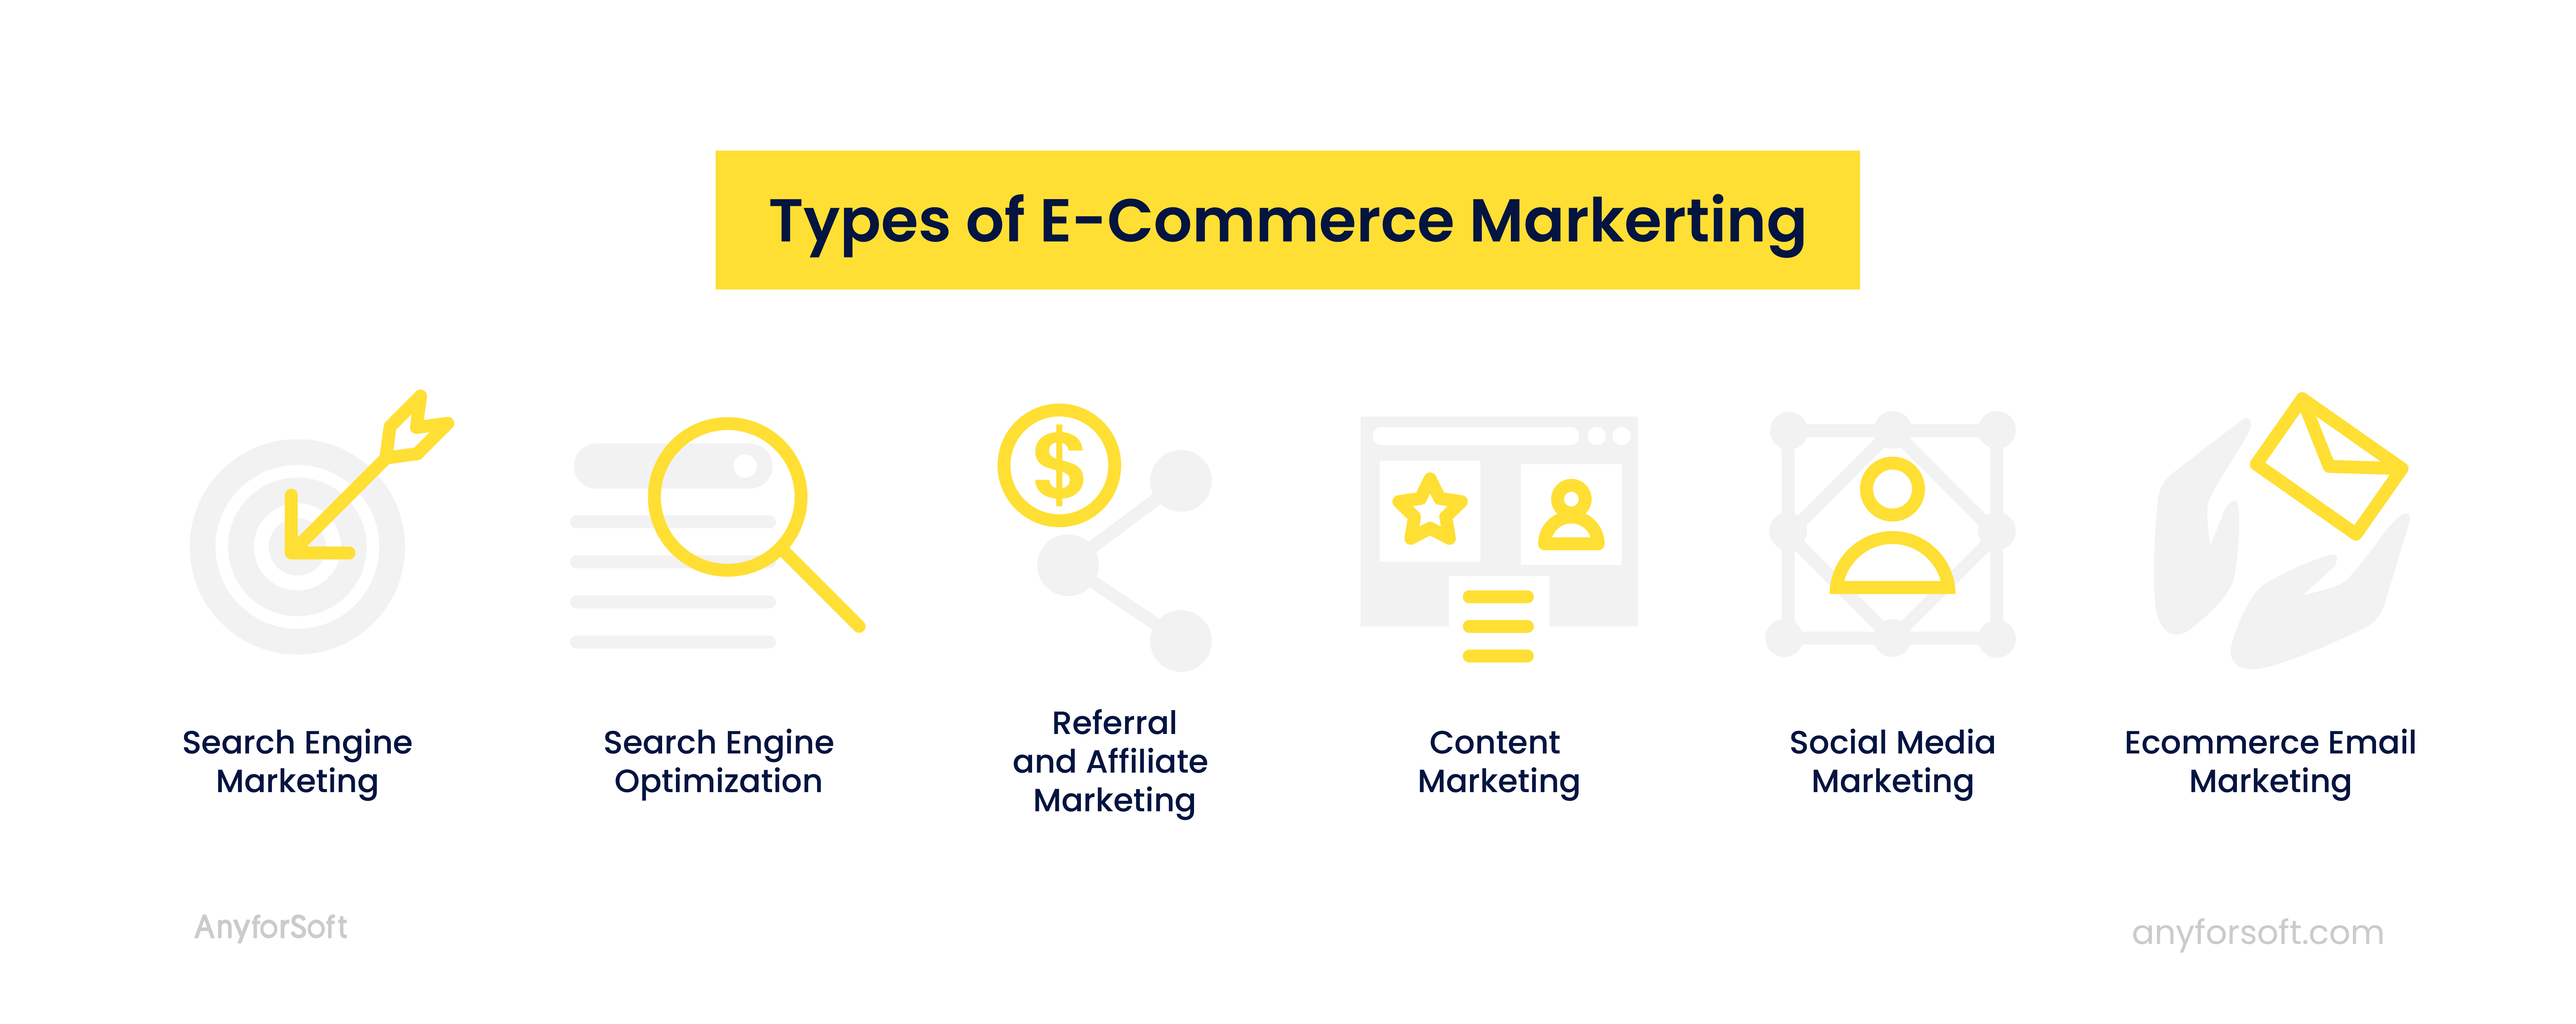 Types of E-commerce Marketing